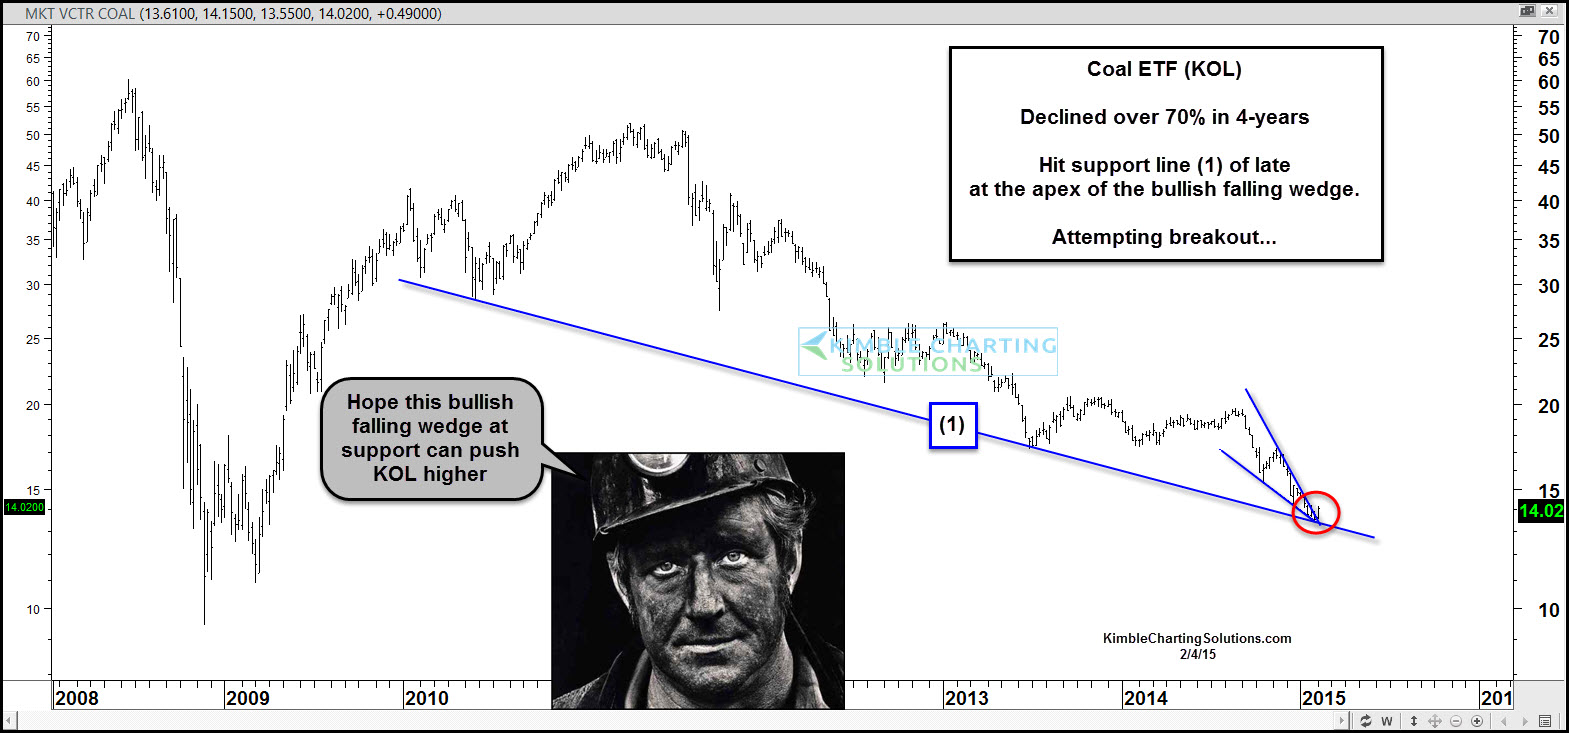 Coal ETF (KOL) Chart, decline over 70% in 4 years